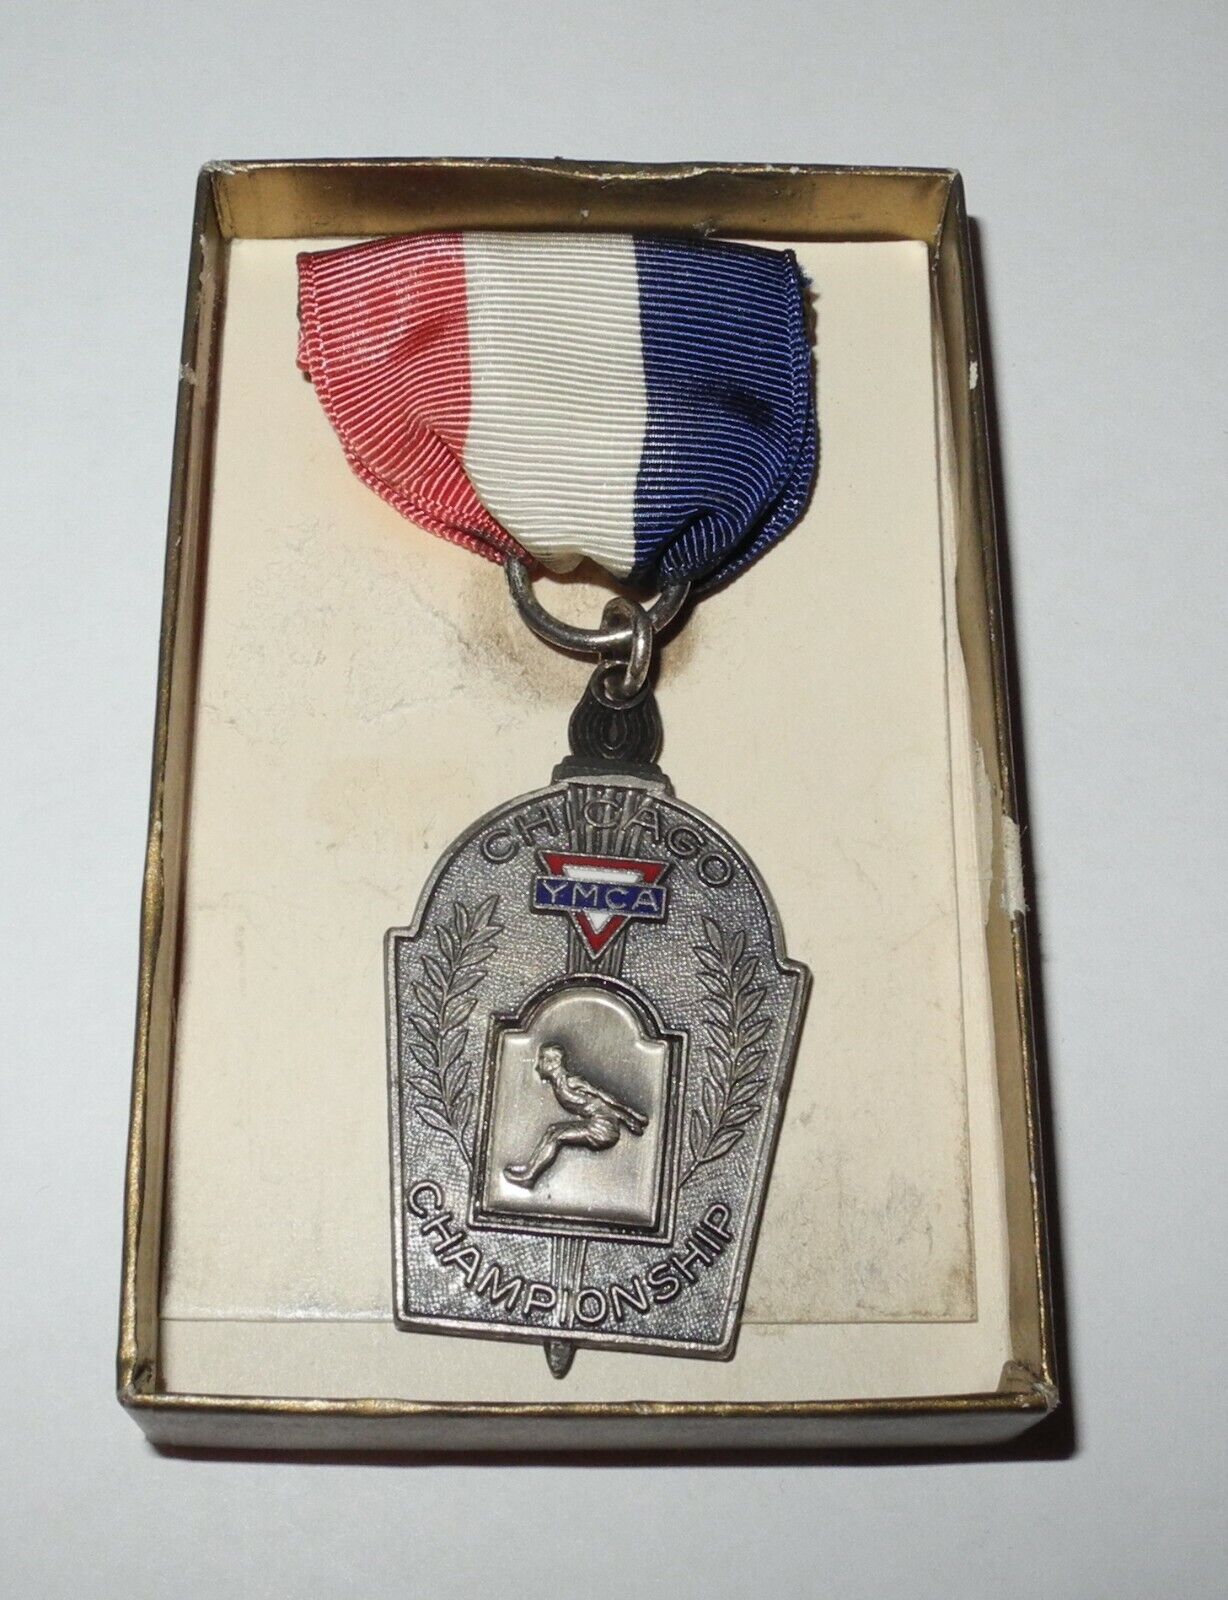 1957 Sports Broad Jump YMCA Chicago Medal Token Badge Pin Button Award Pinback